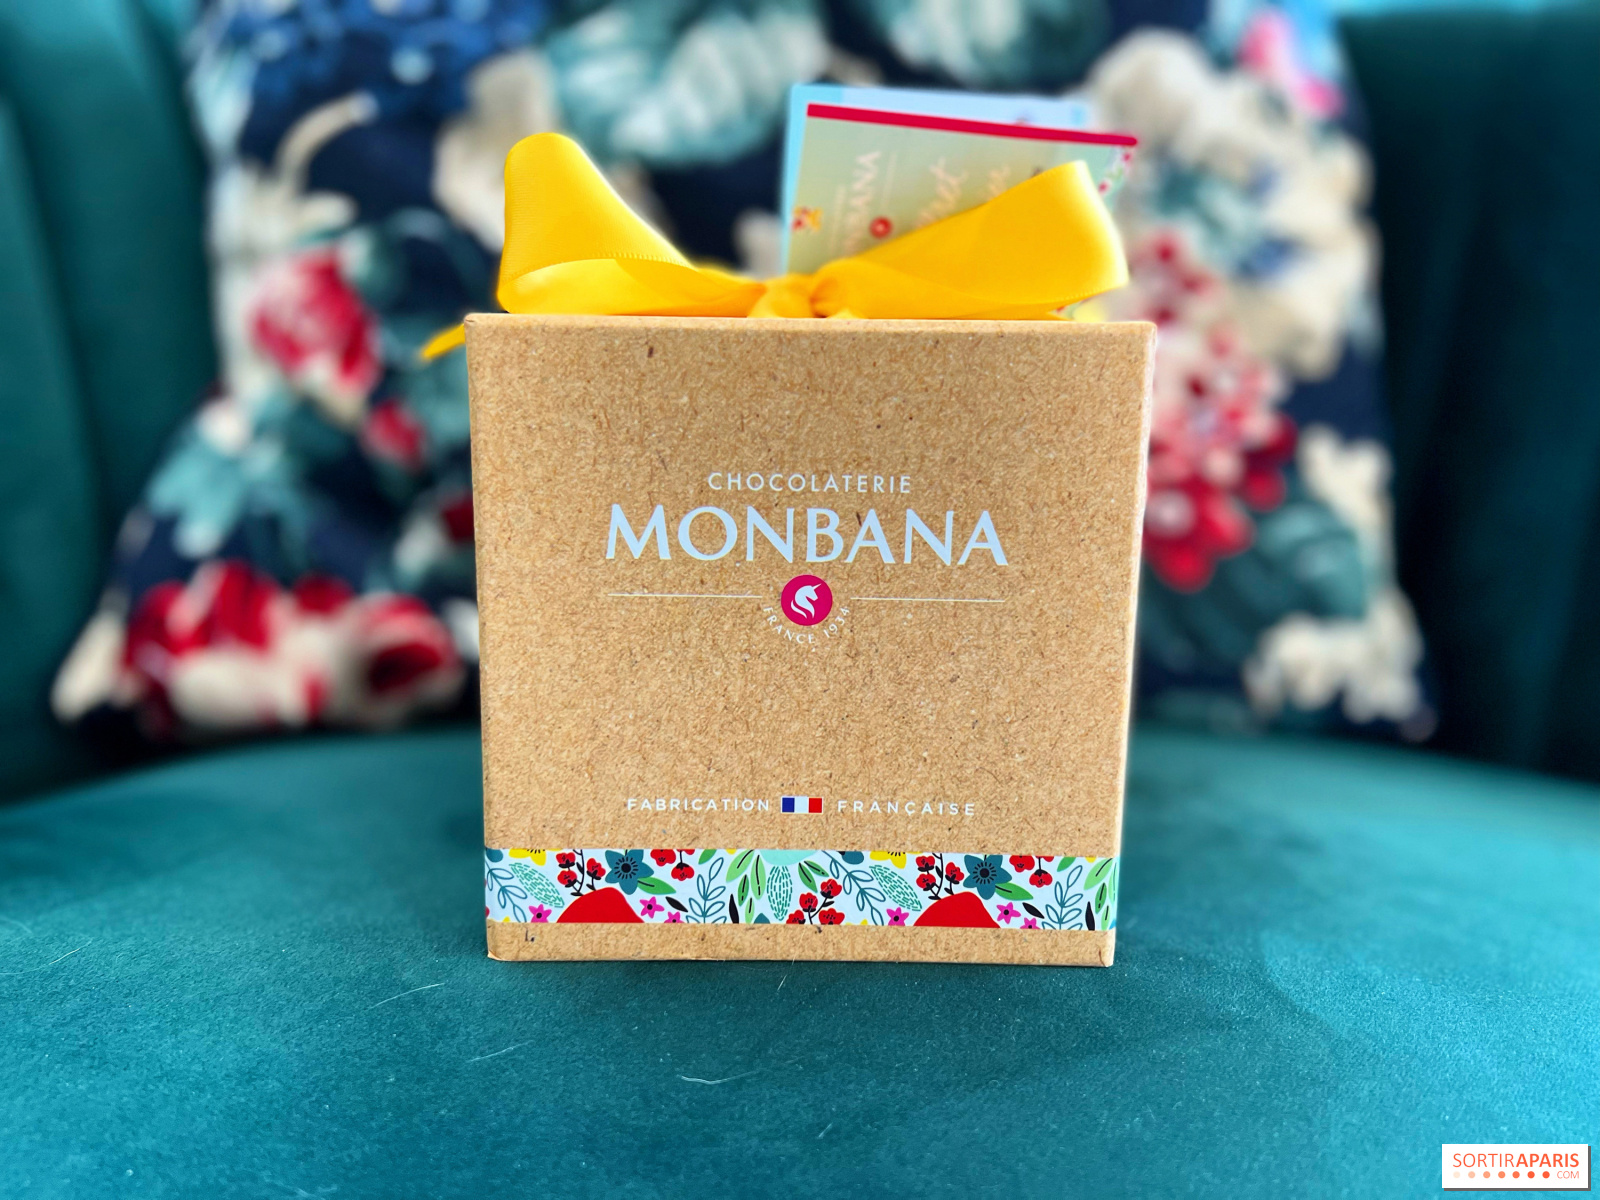 Coffret gourmand Monbana - Chocolat Monbana